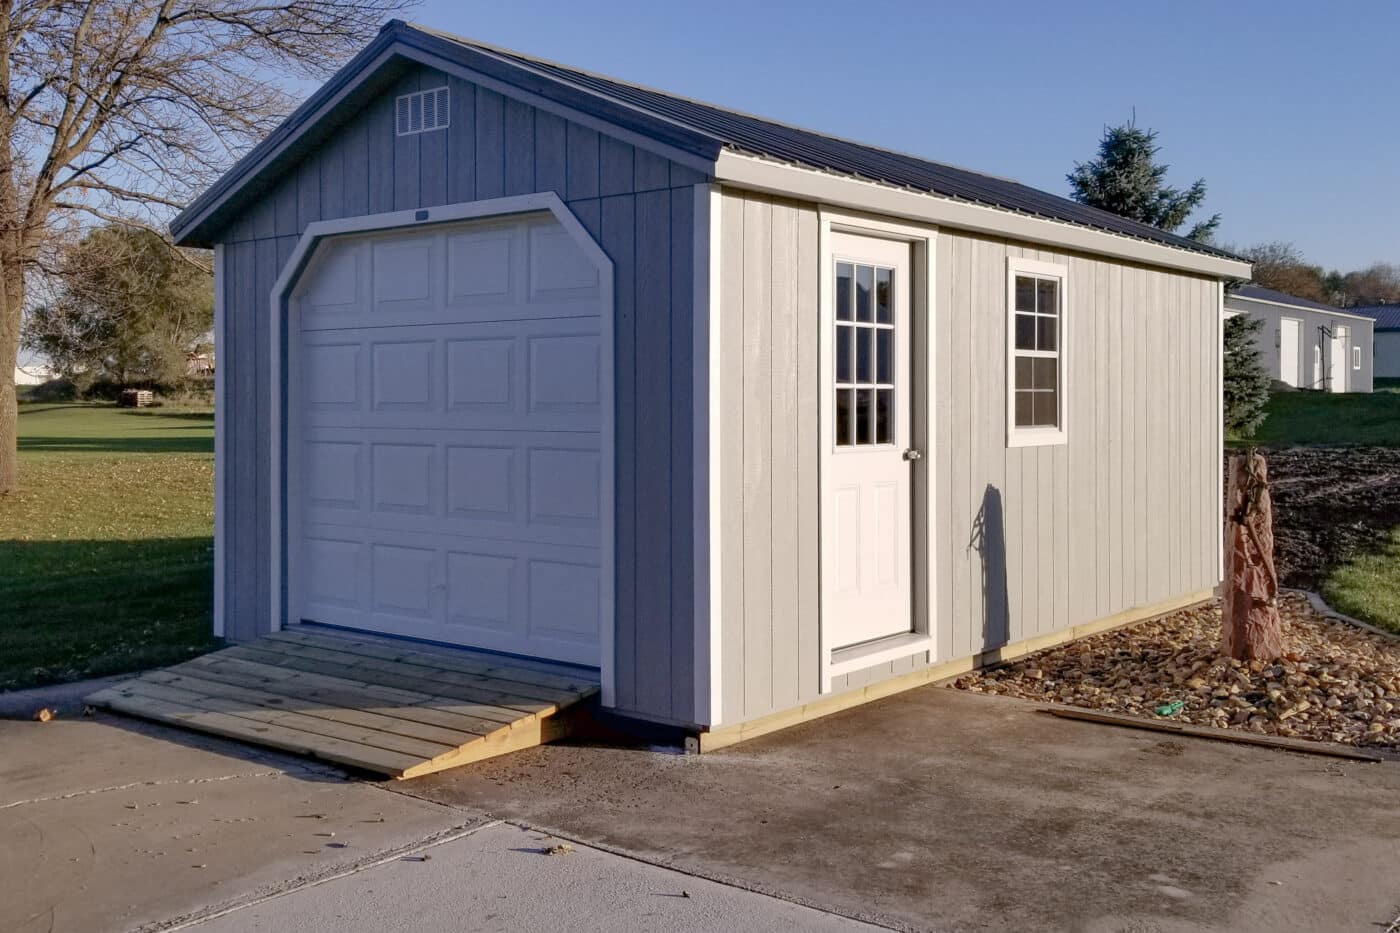 Grey A-Frame detached garage in backyard